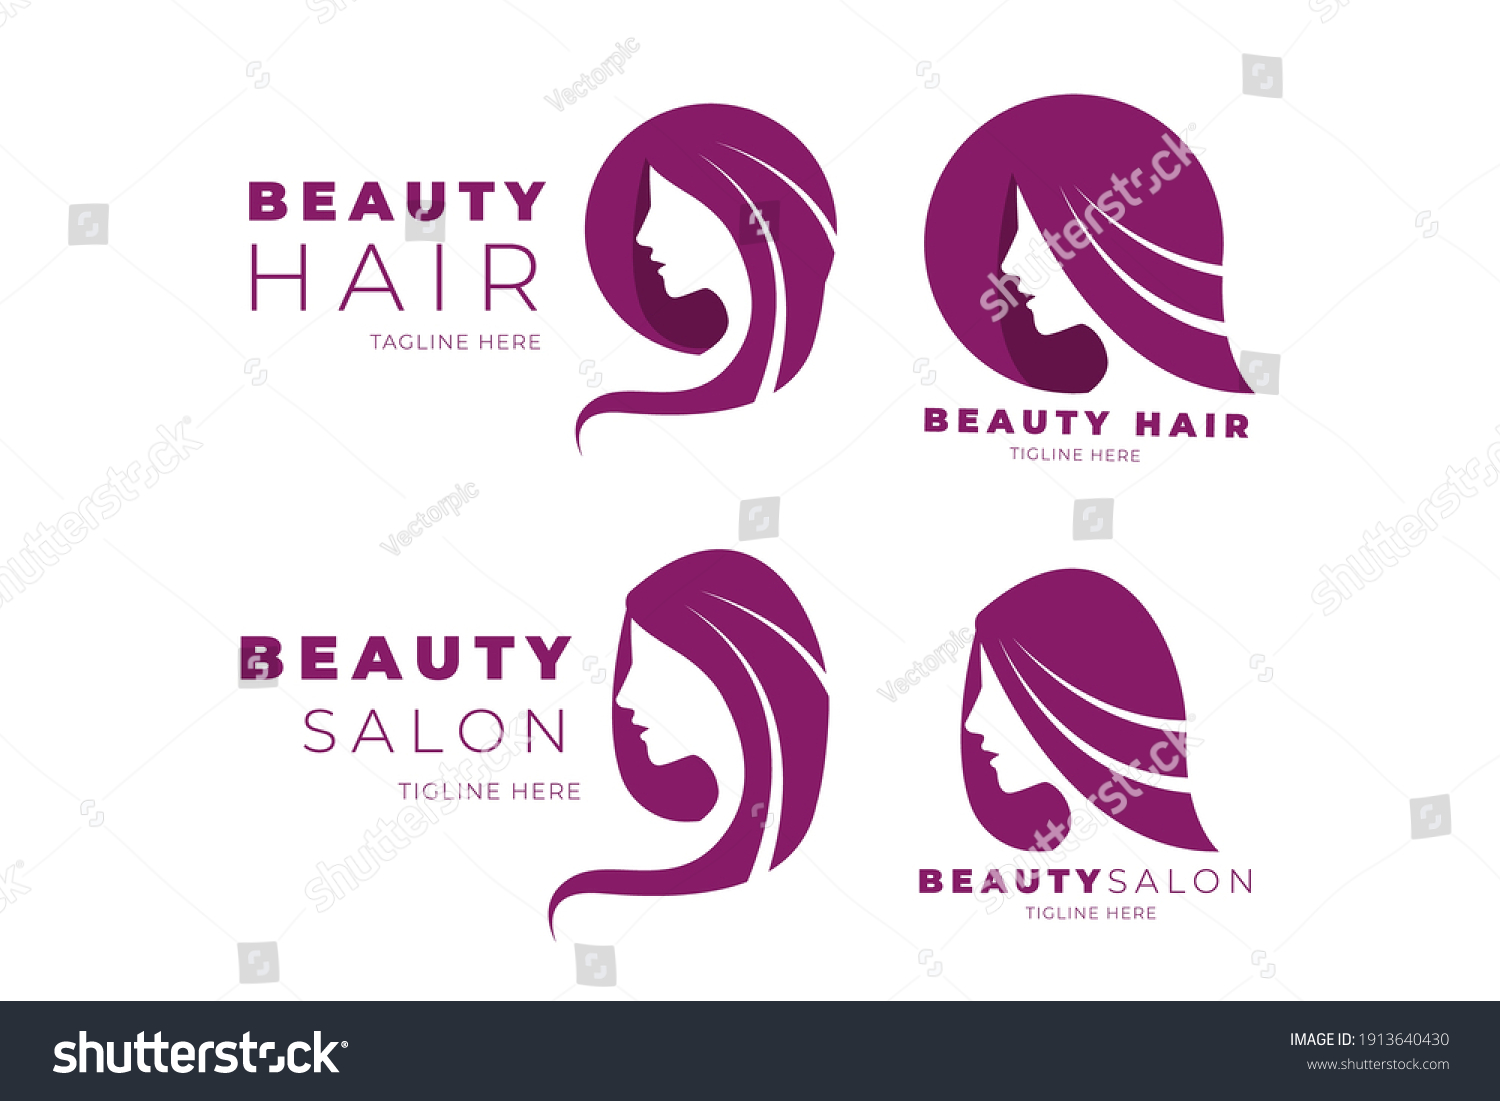 Flathand Drawn Hair Salon Logo Collection Stock Vector (Royalty Free ...